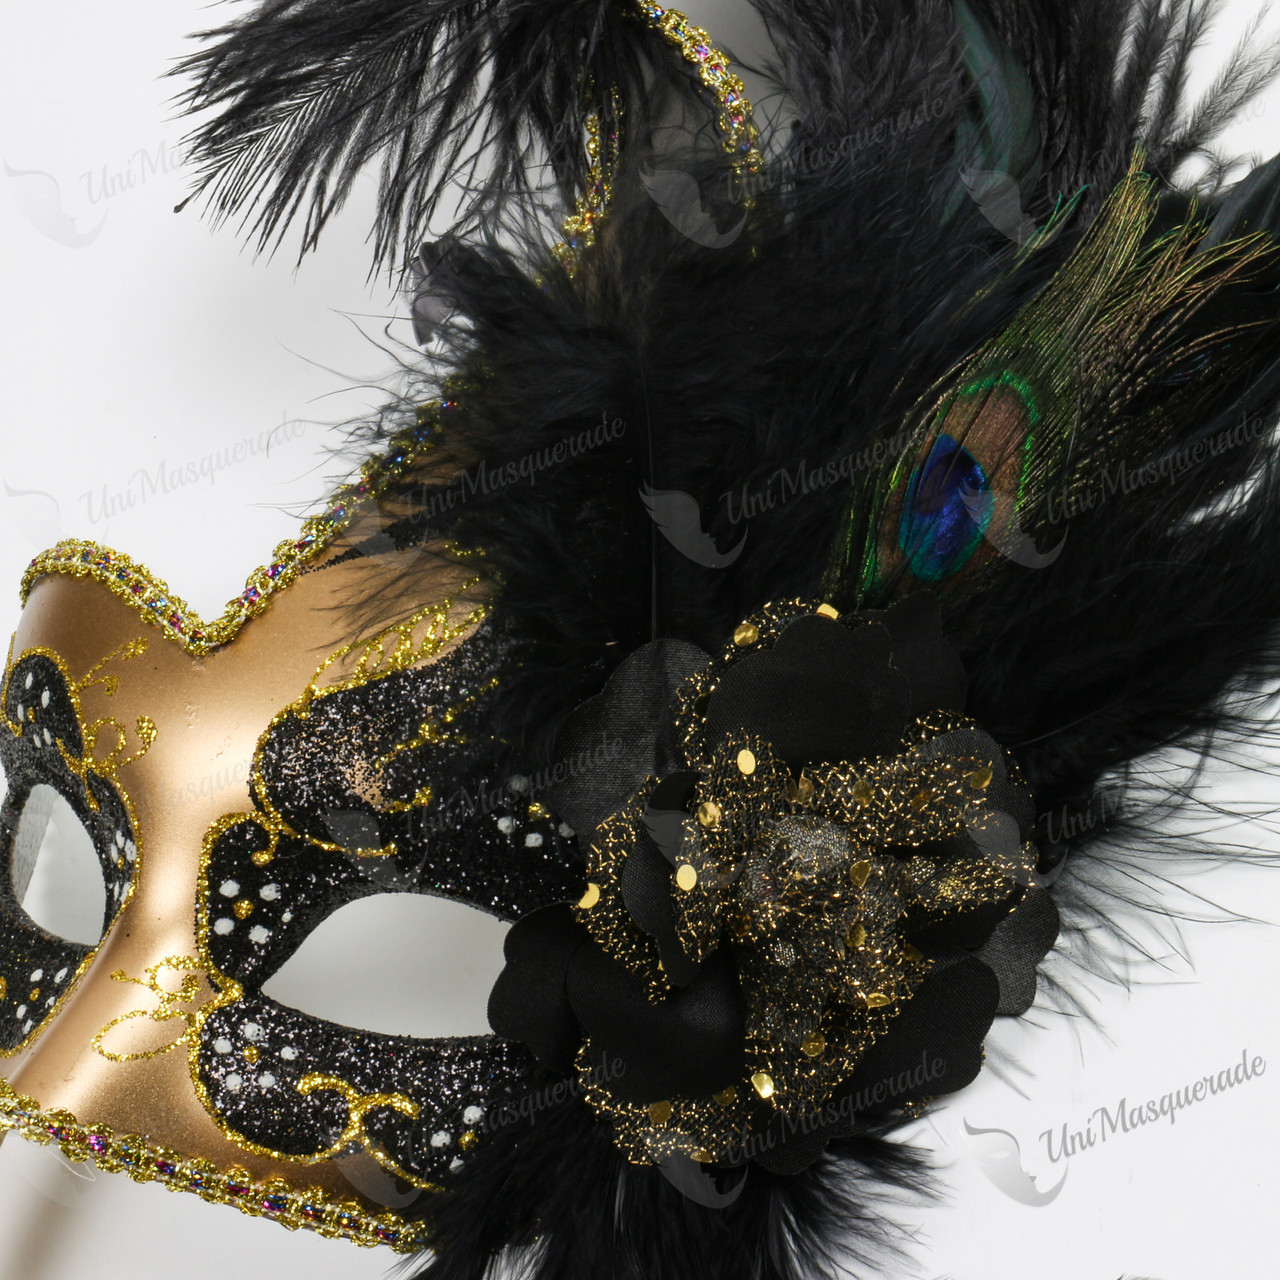 female masquerade masks on a stick